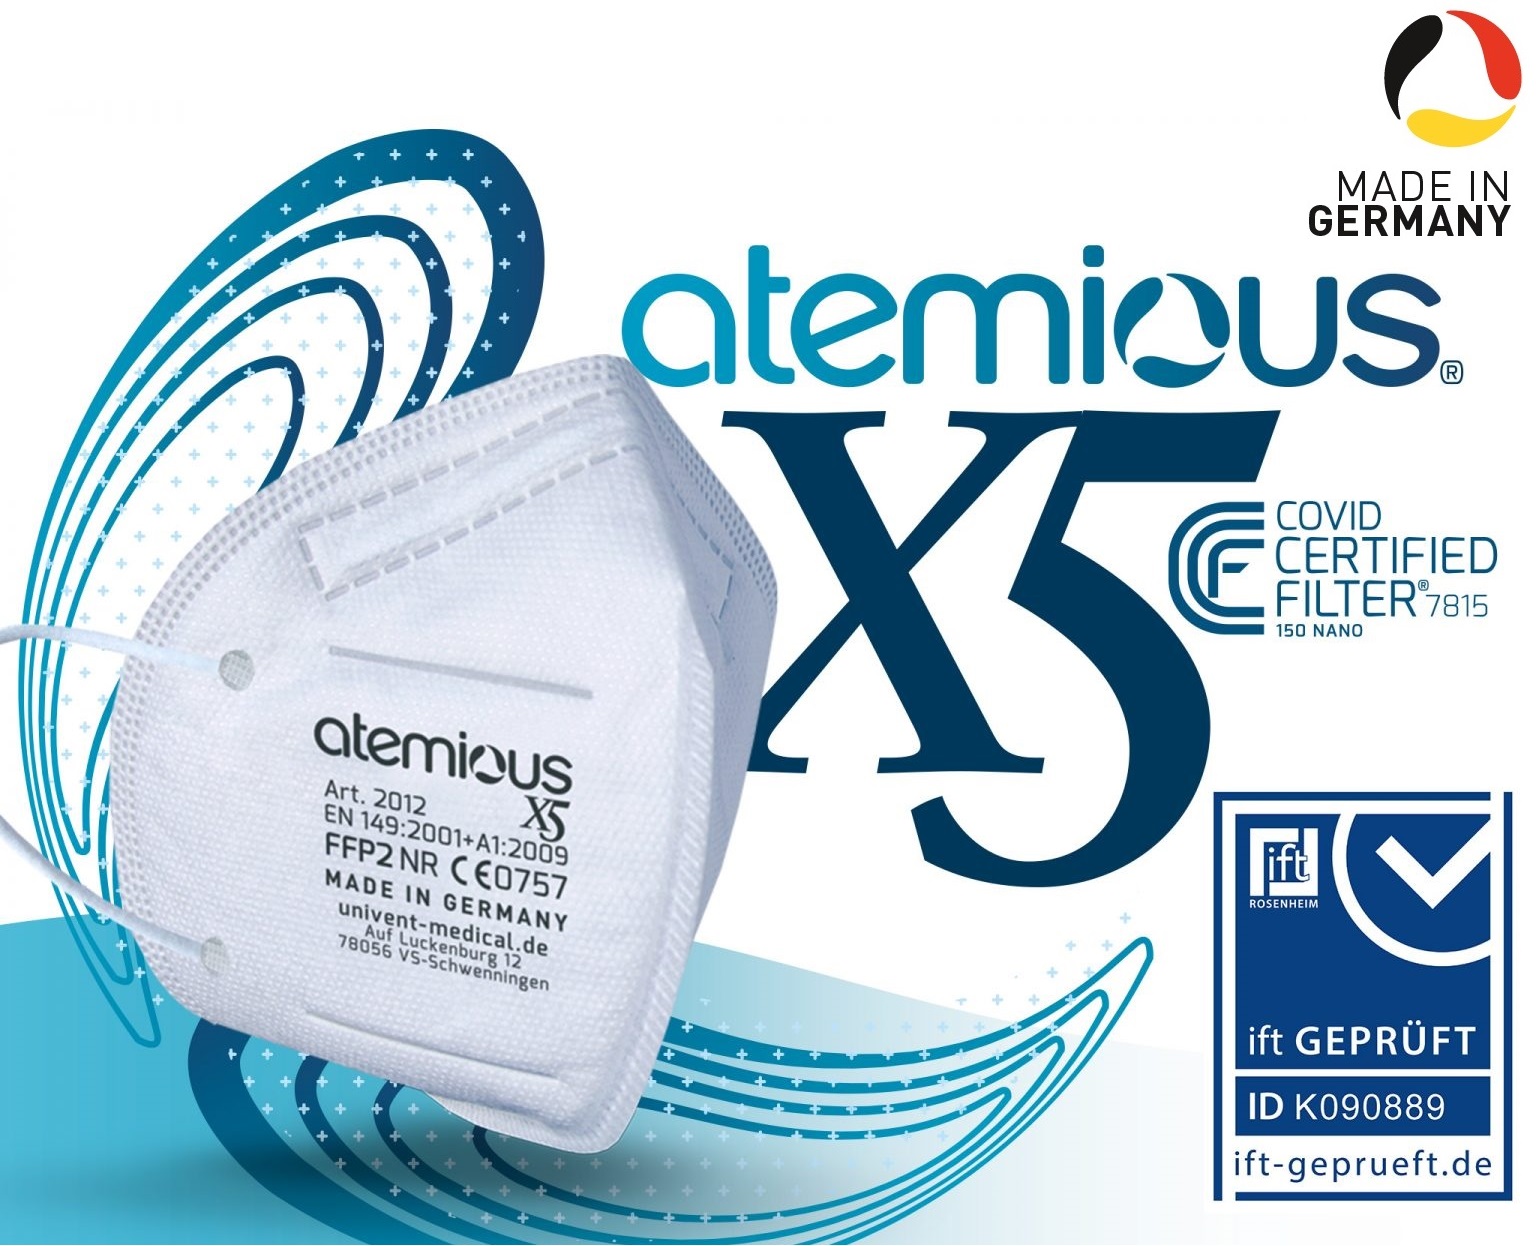 Atemious X5 Atemschutzmask, Made in Germany